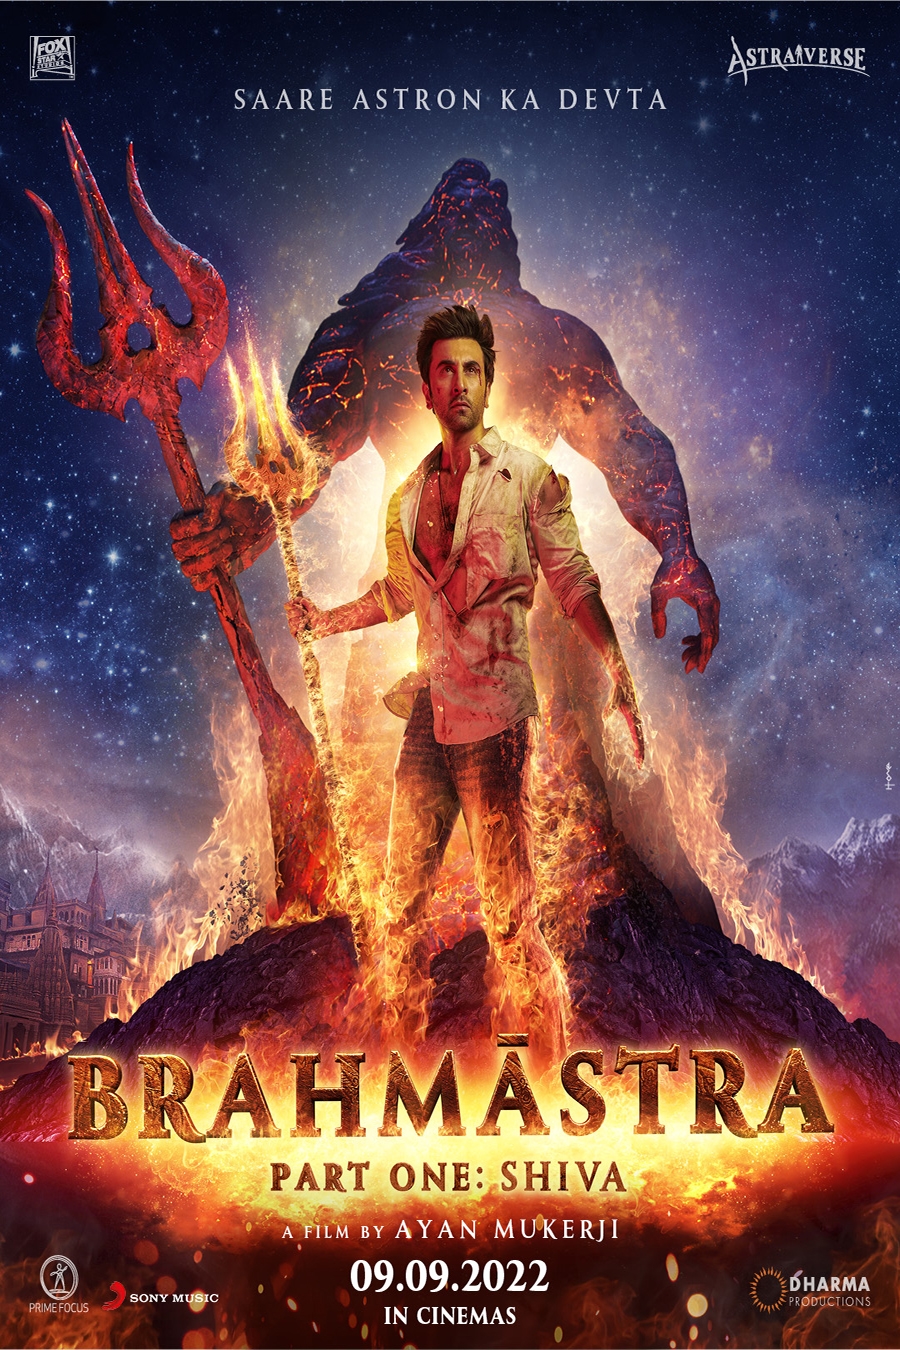 Brahmastra Part One: Shiva (Hindi) Poster